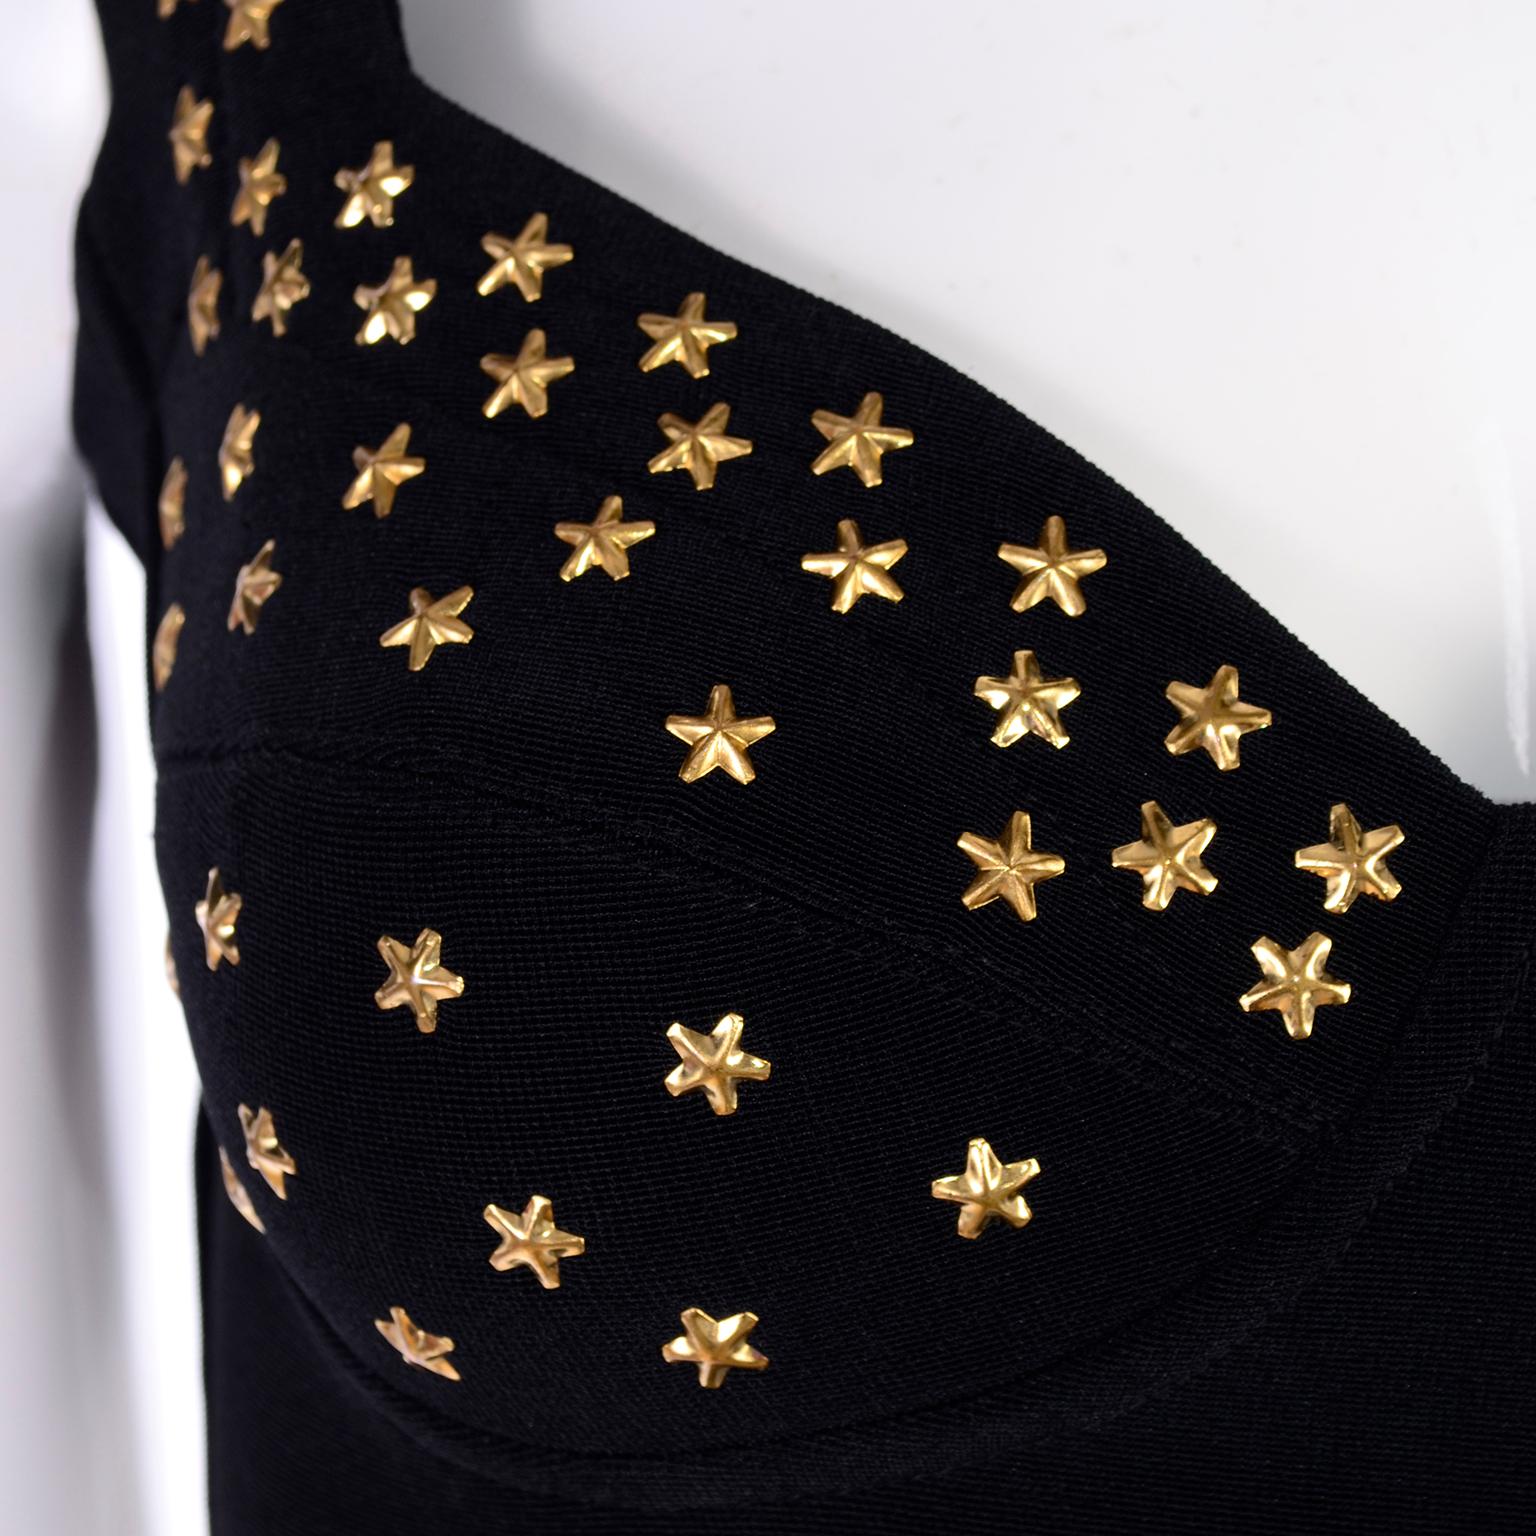 Vintage 1990s Tadashi Shoji Gold Star Studded Bodycon Black Dress For Sale 2